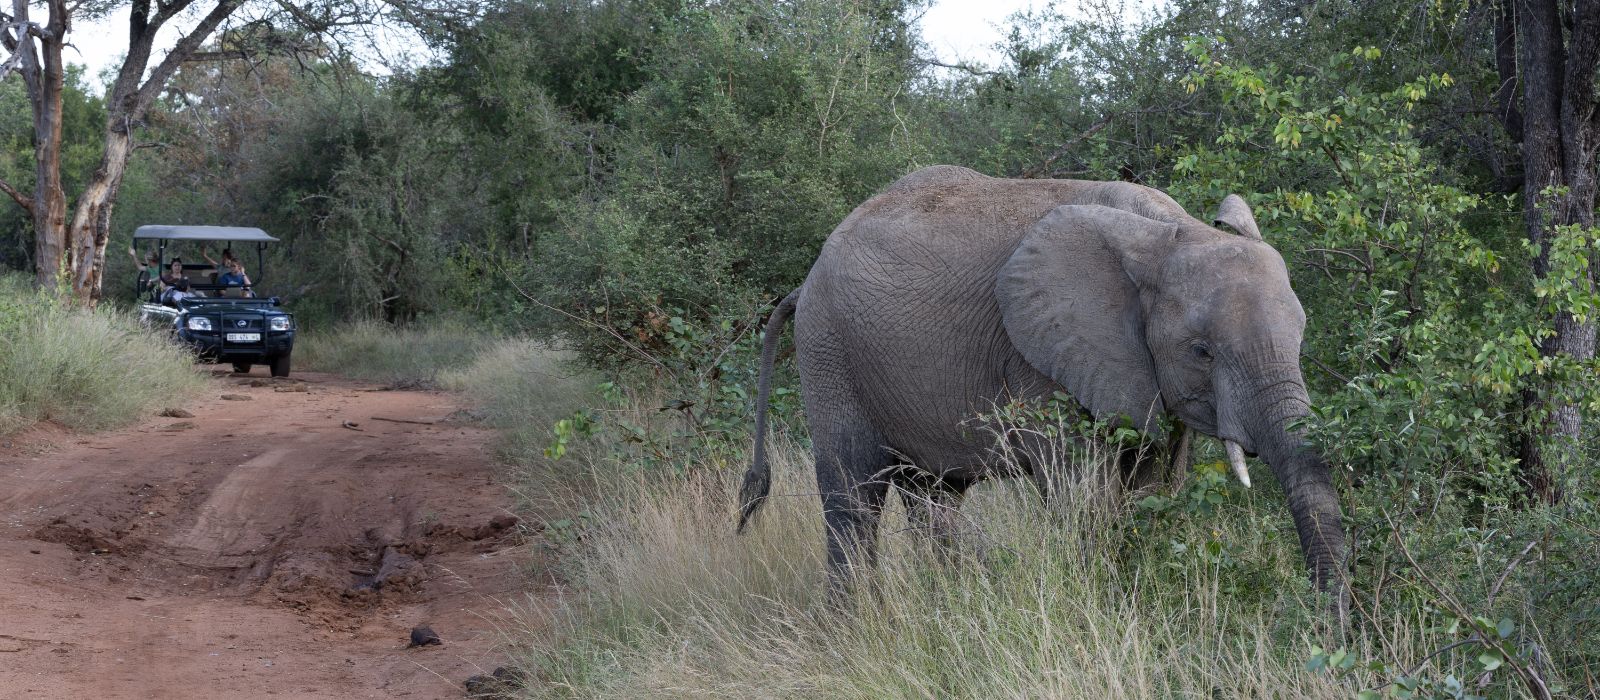 an elephant walking in a grass